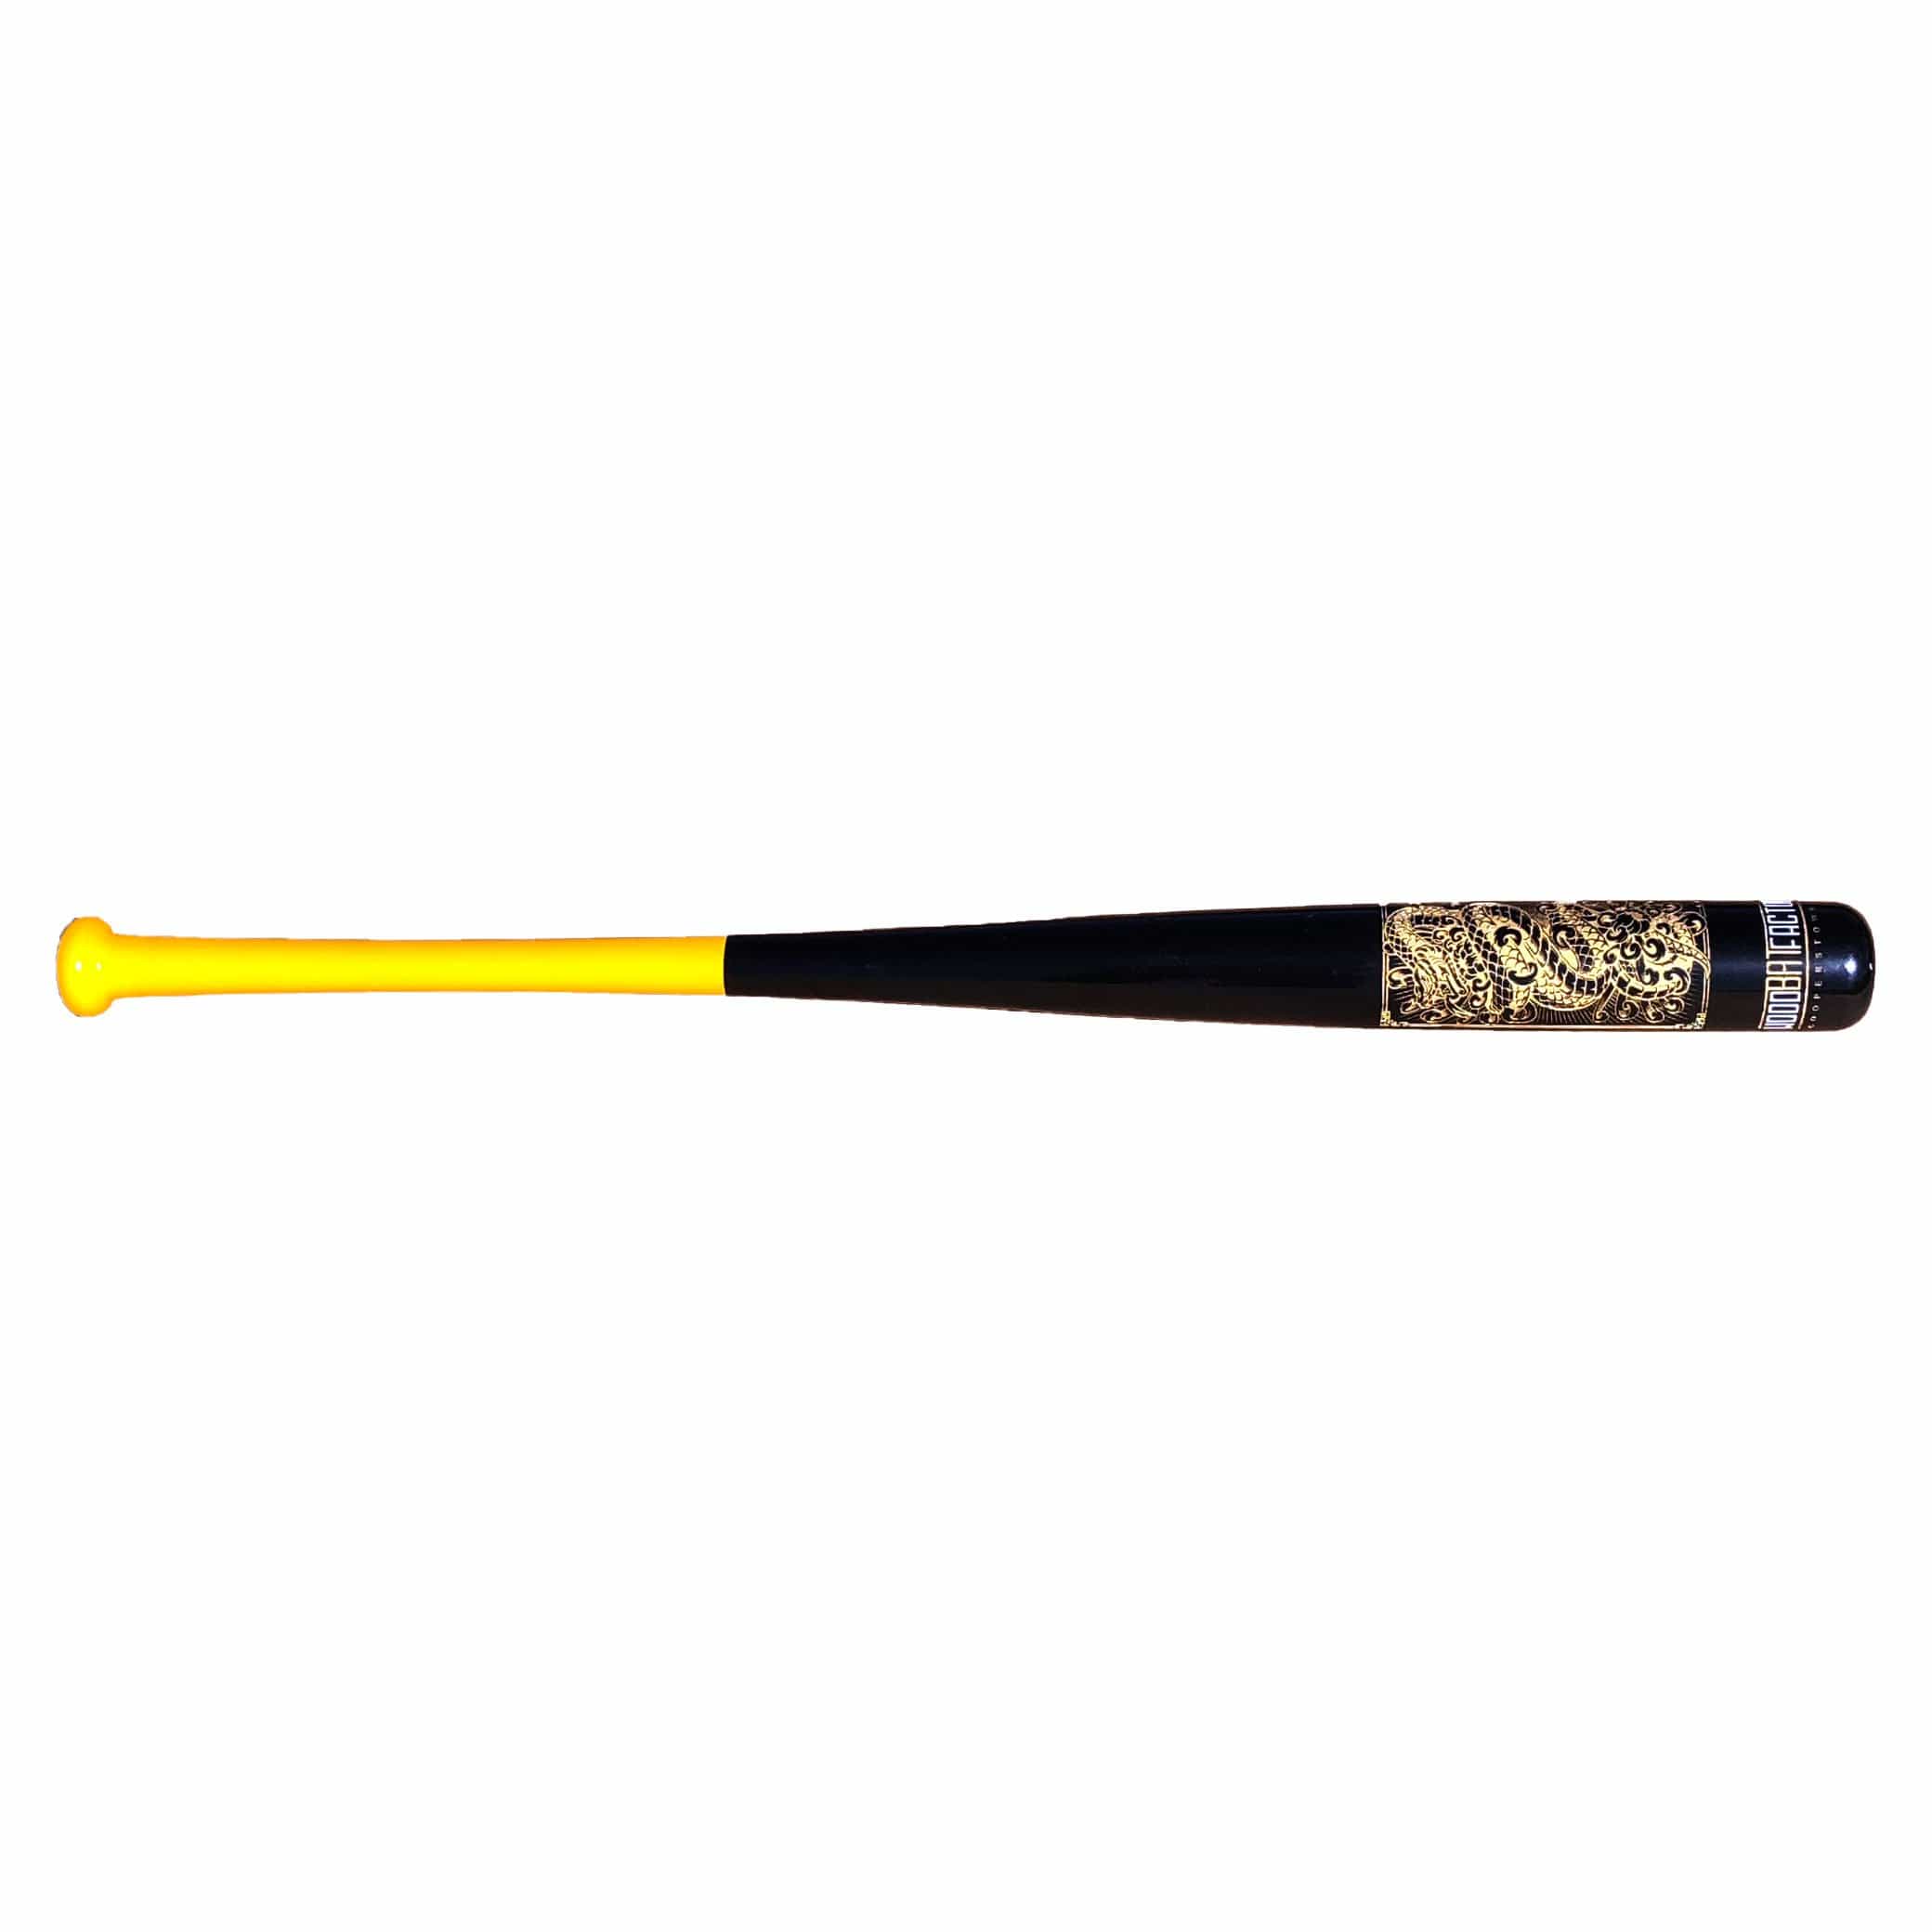 Custom Engraved & Painted Wood Trophy Bat – The Wood Bat